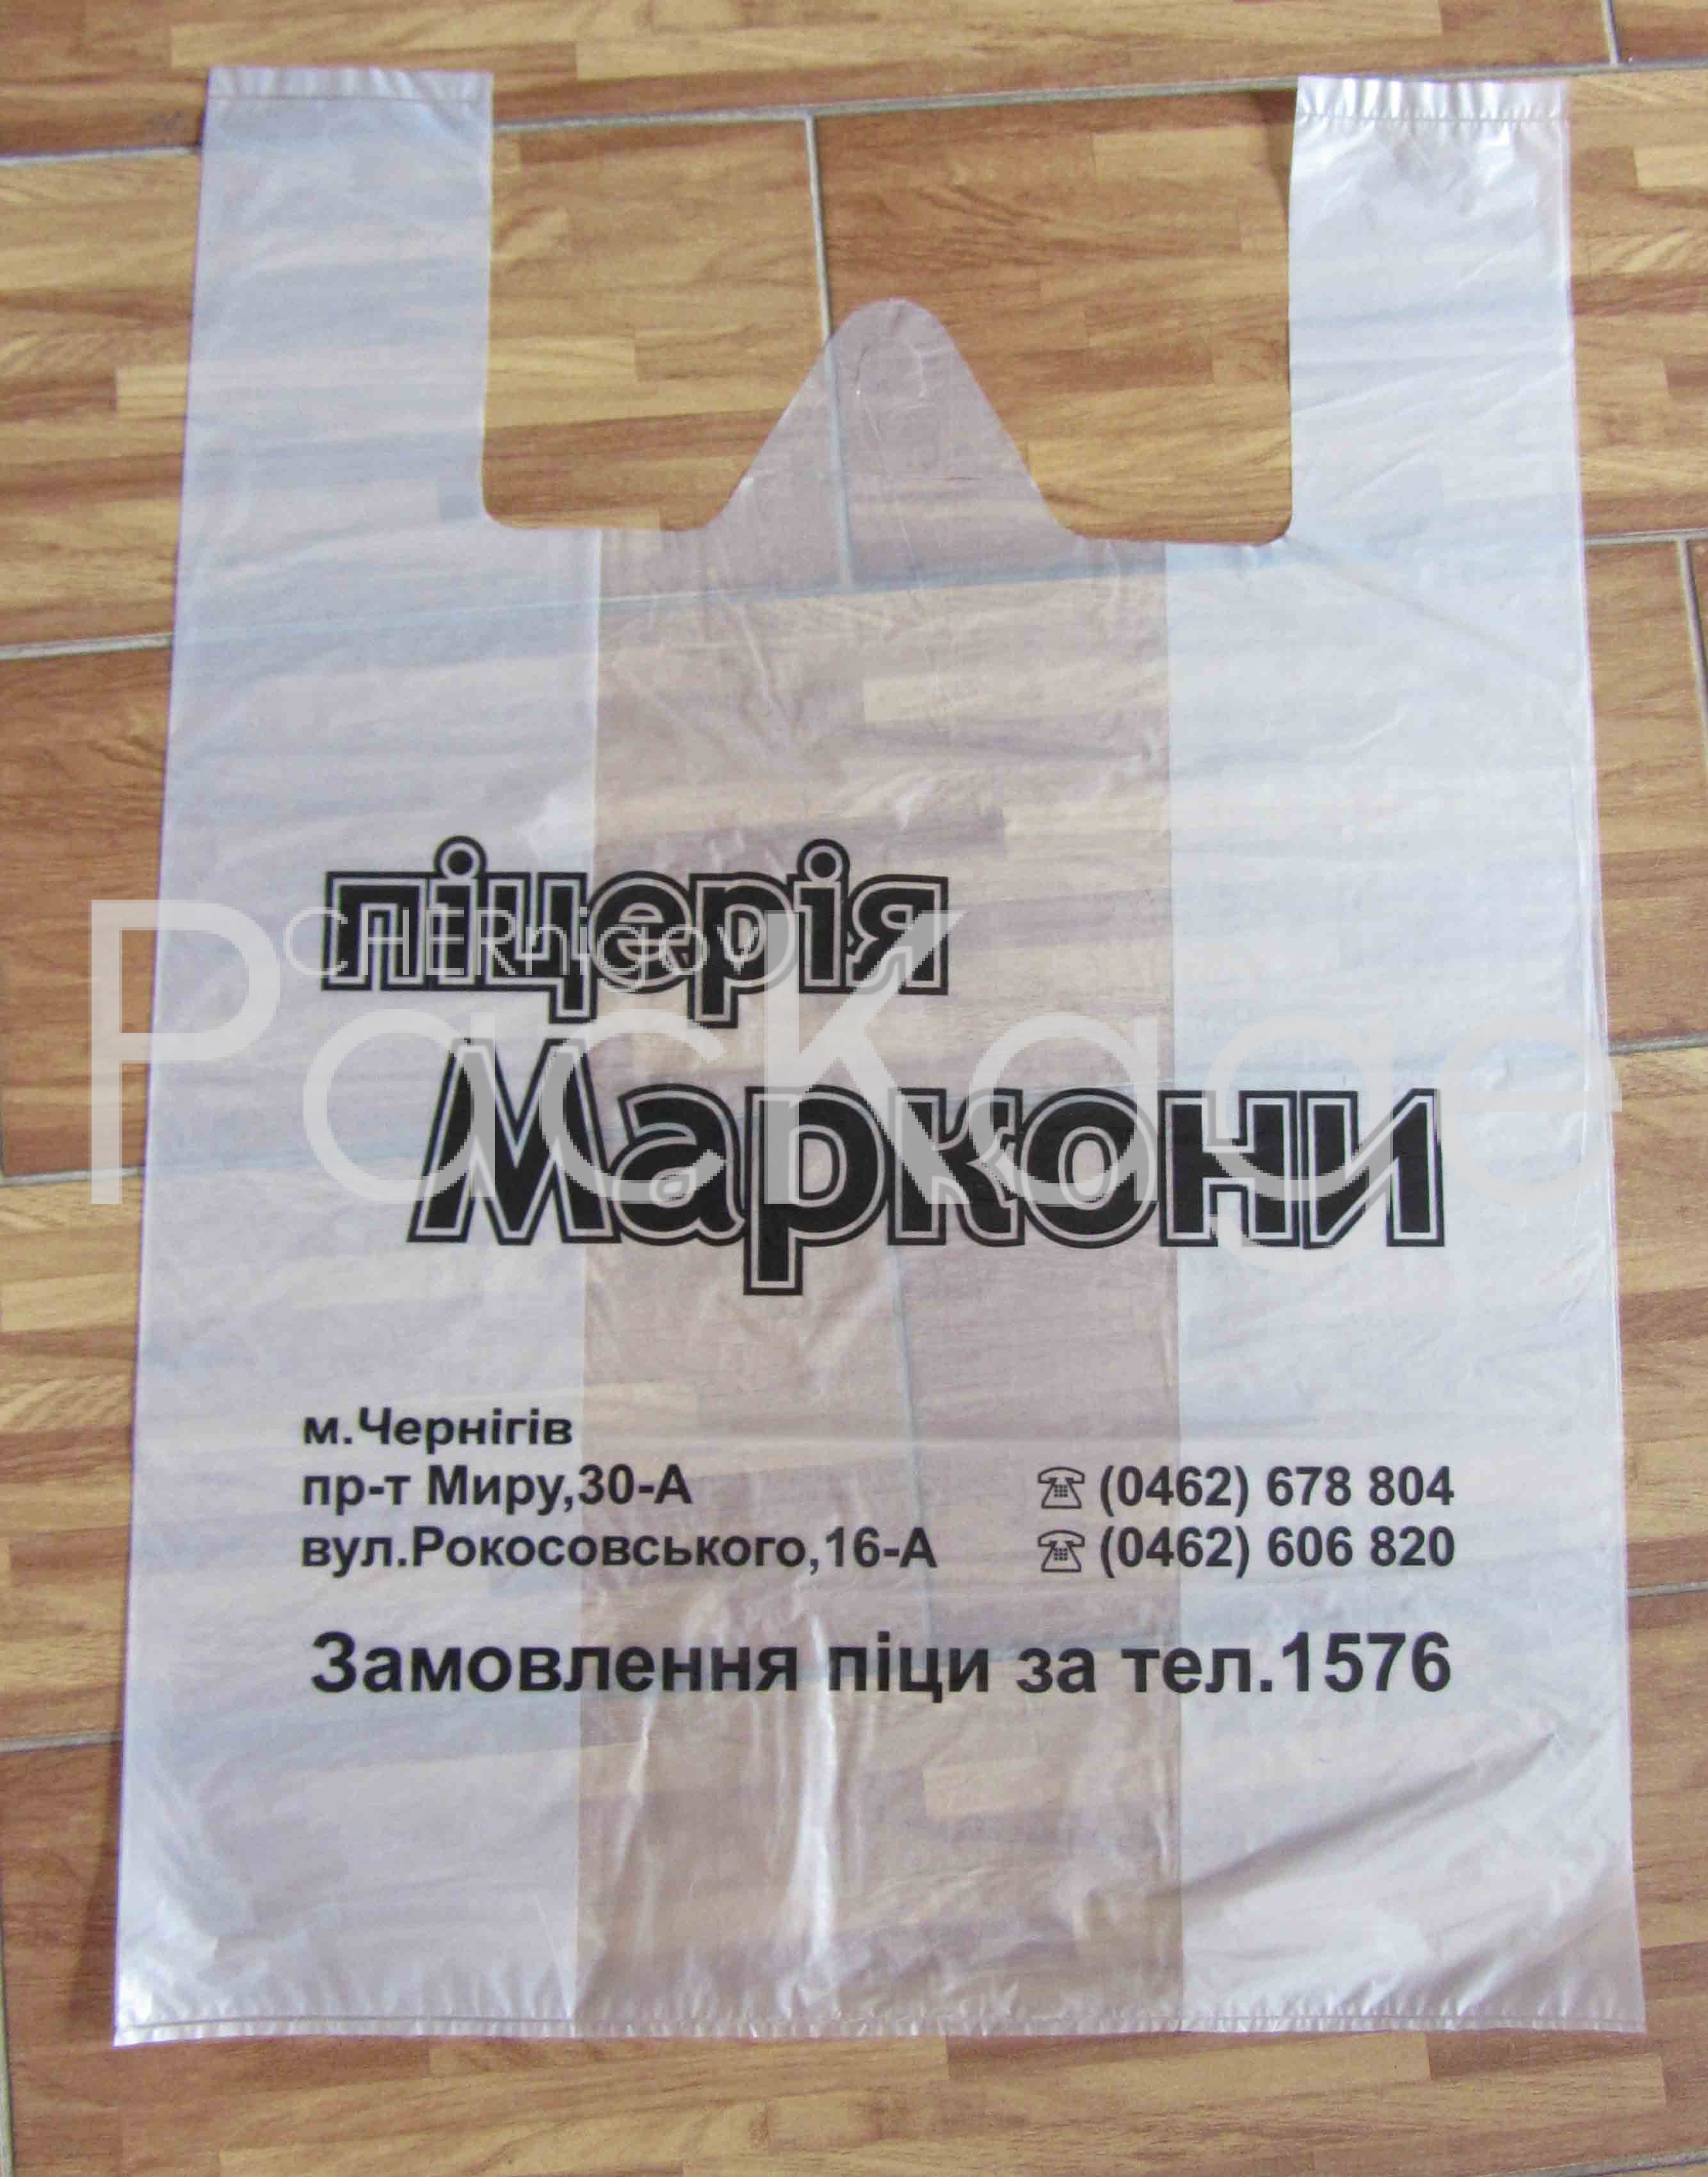 Изготовление упаковки на заказ Chernigov Package - Photo IMG_6488